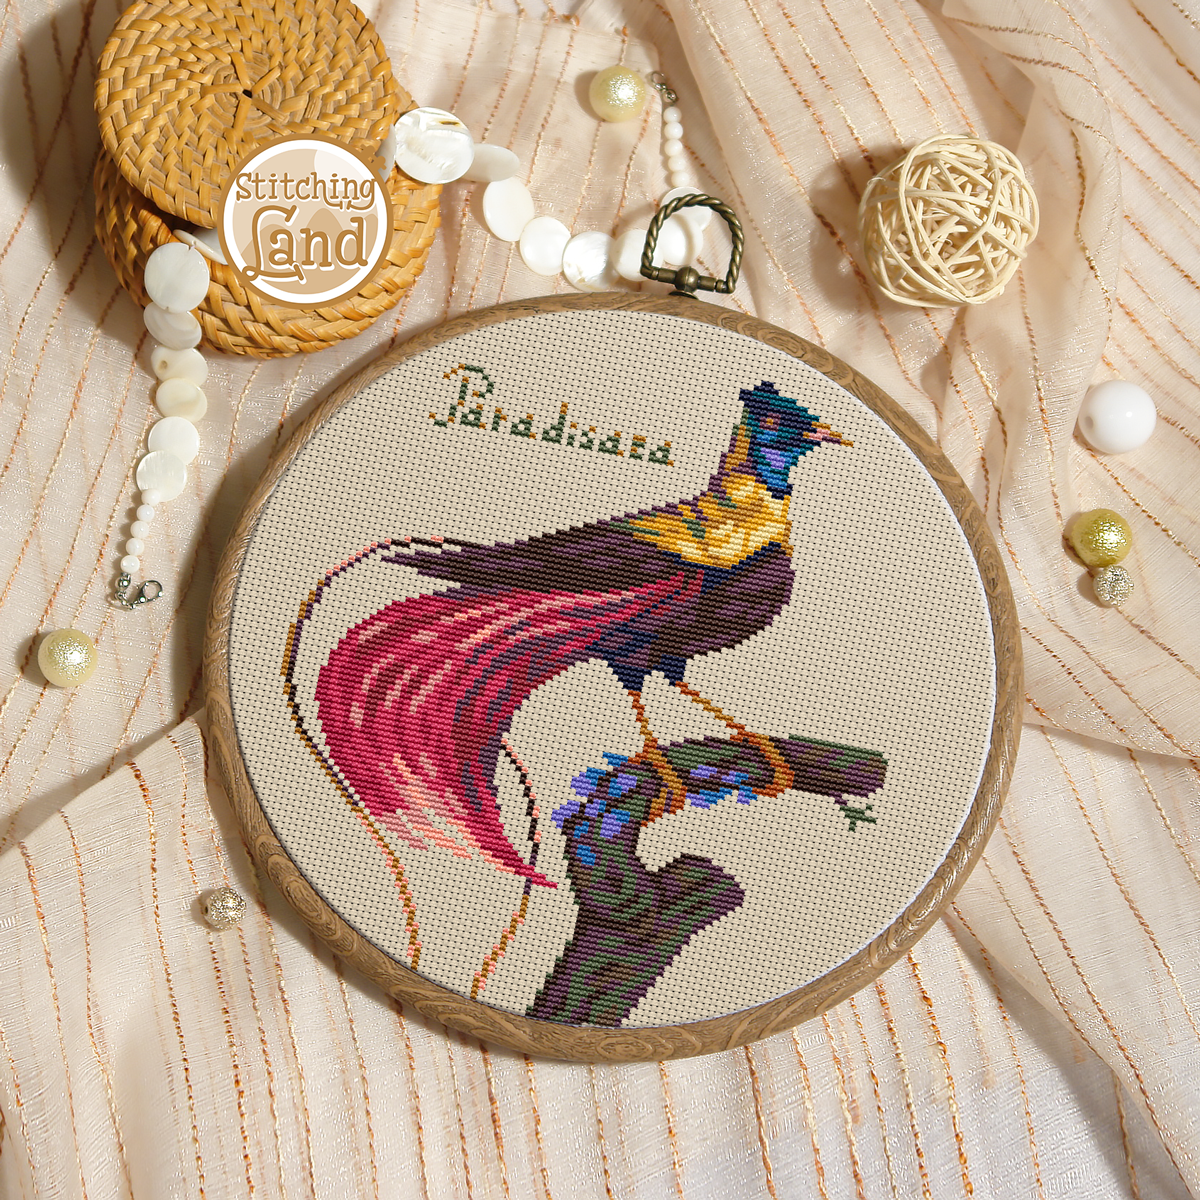 Bird of Paradise Strelitzia Punch Needle Embroidery Pattern PDF